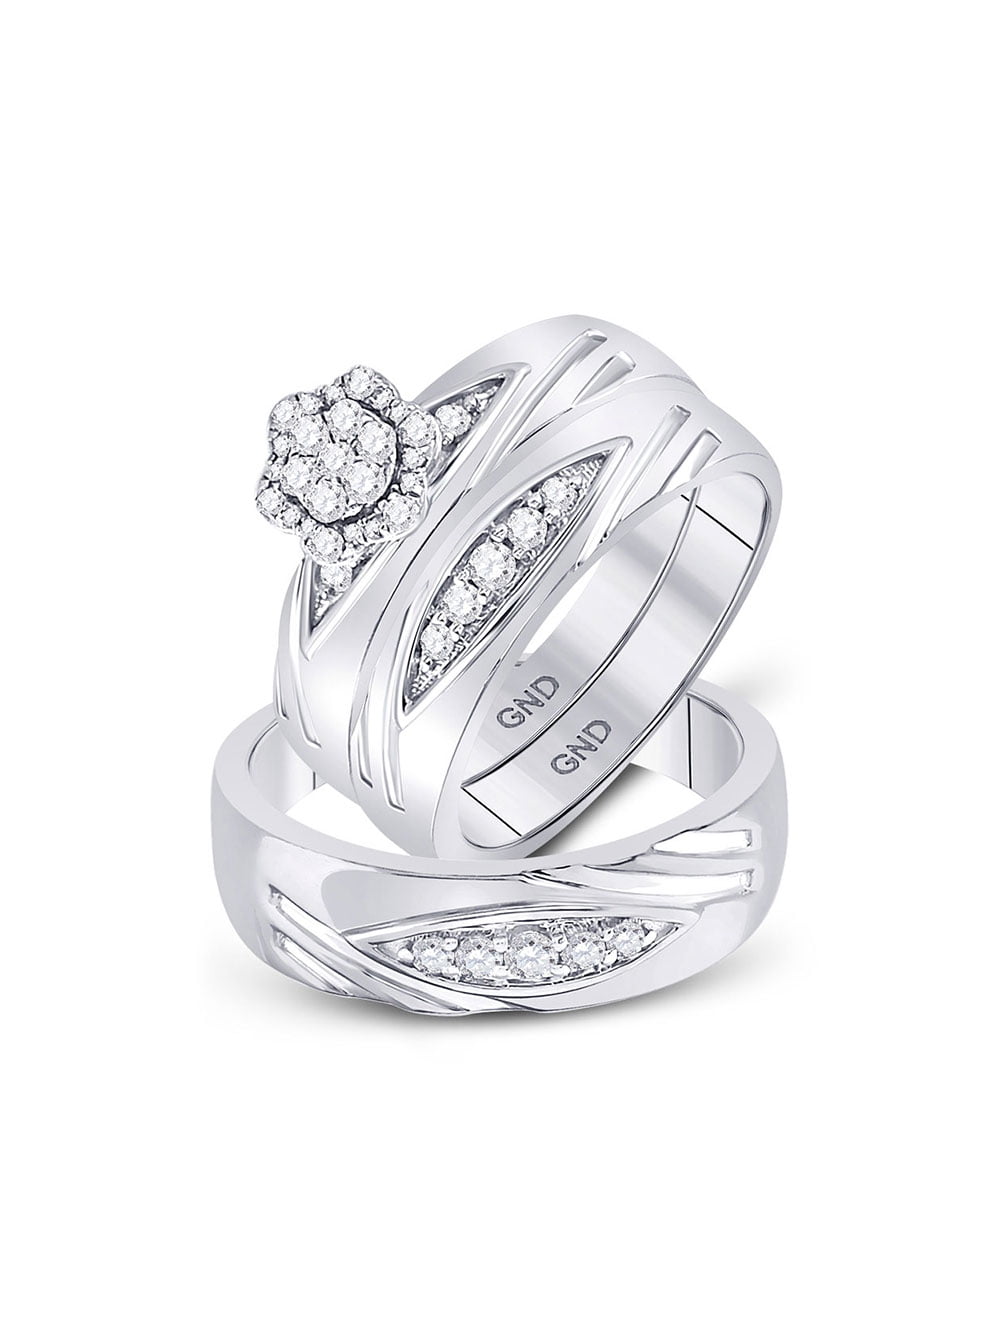 Details about   14k White Gold Finish 0.88 Ct Round Cut Diamond Unique Engagement Wedding Ring 